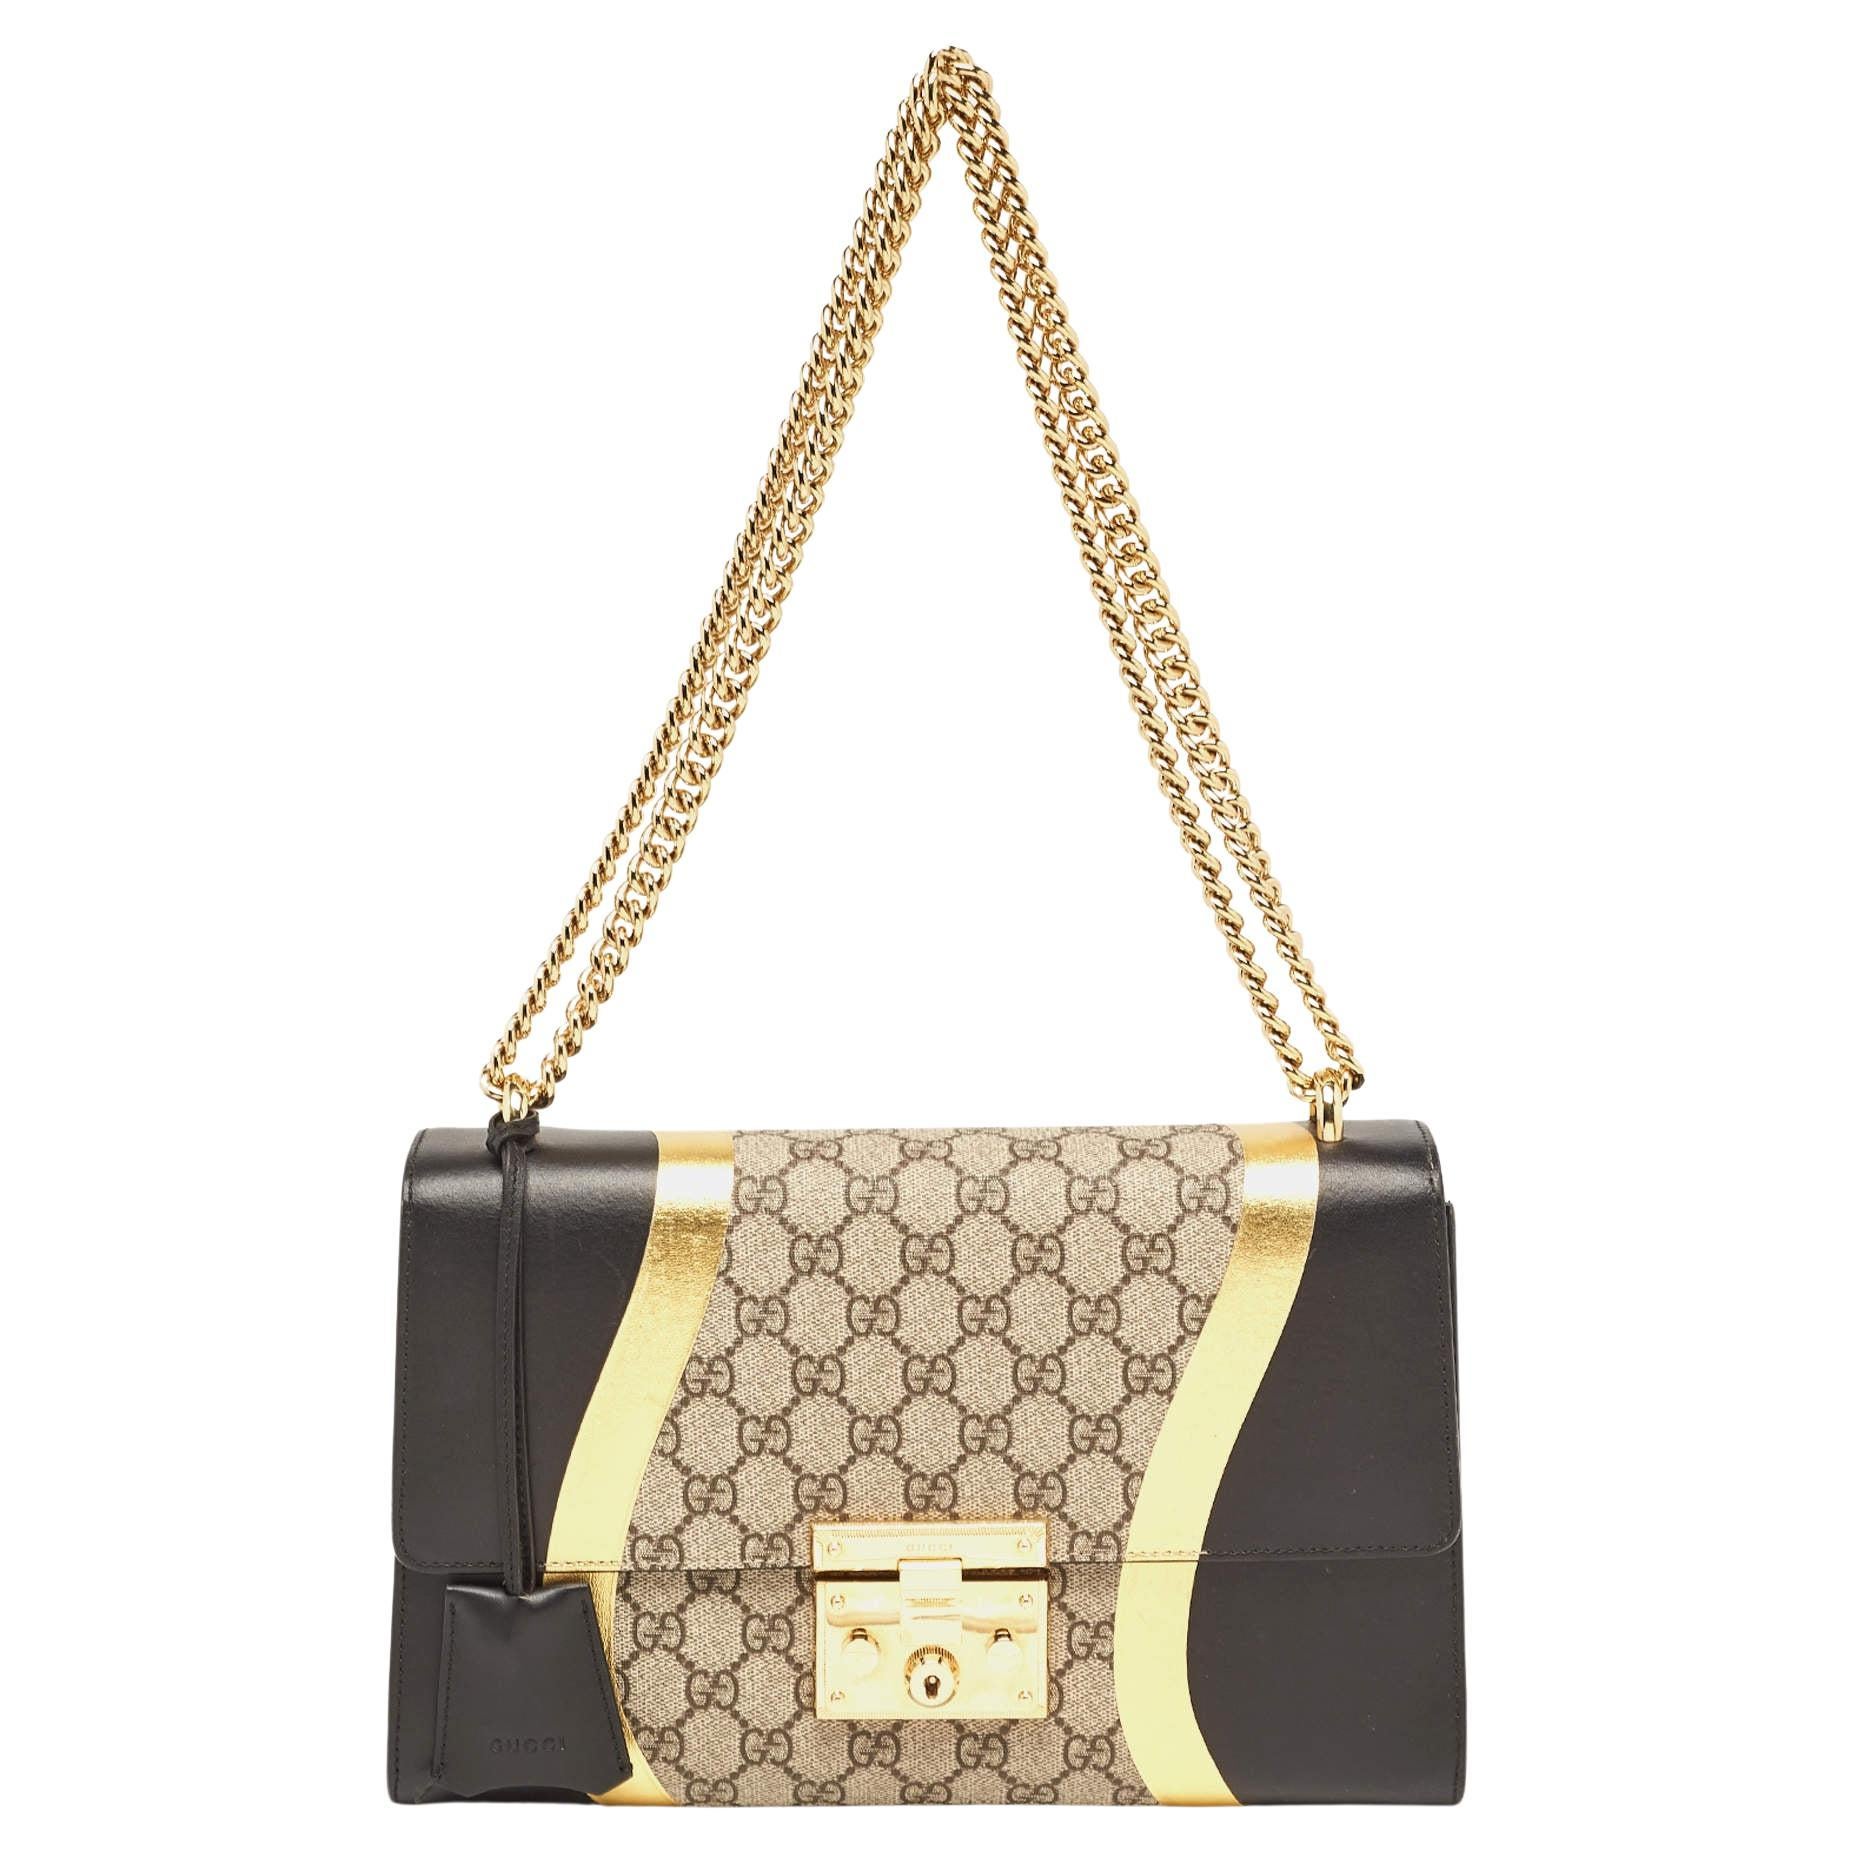 Gucci Tricolor GG Supreme Canvas and Leather Medium Padlock Shoulder Bag